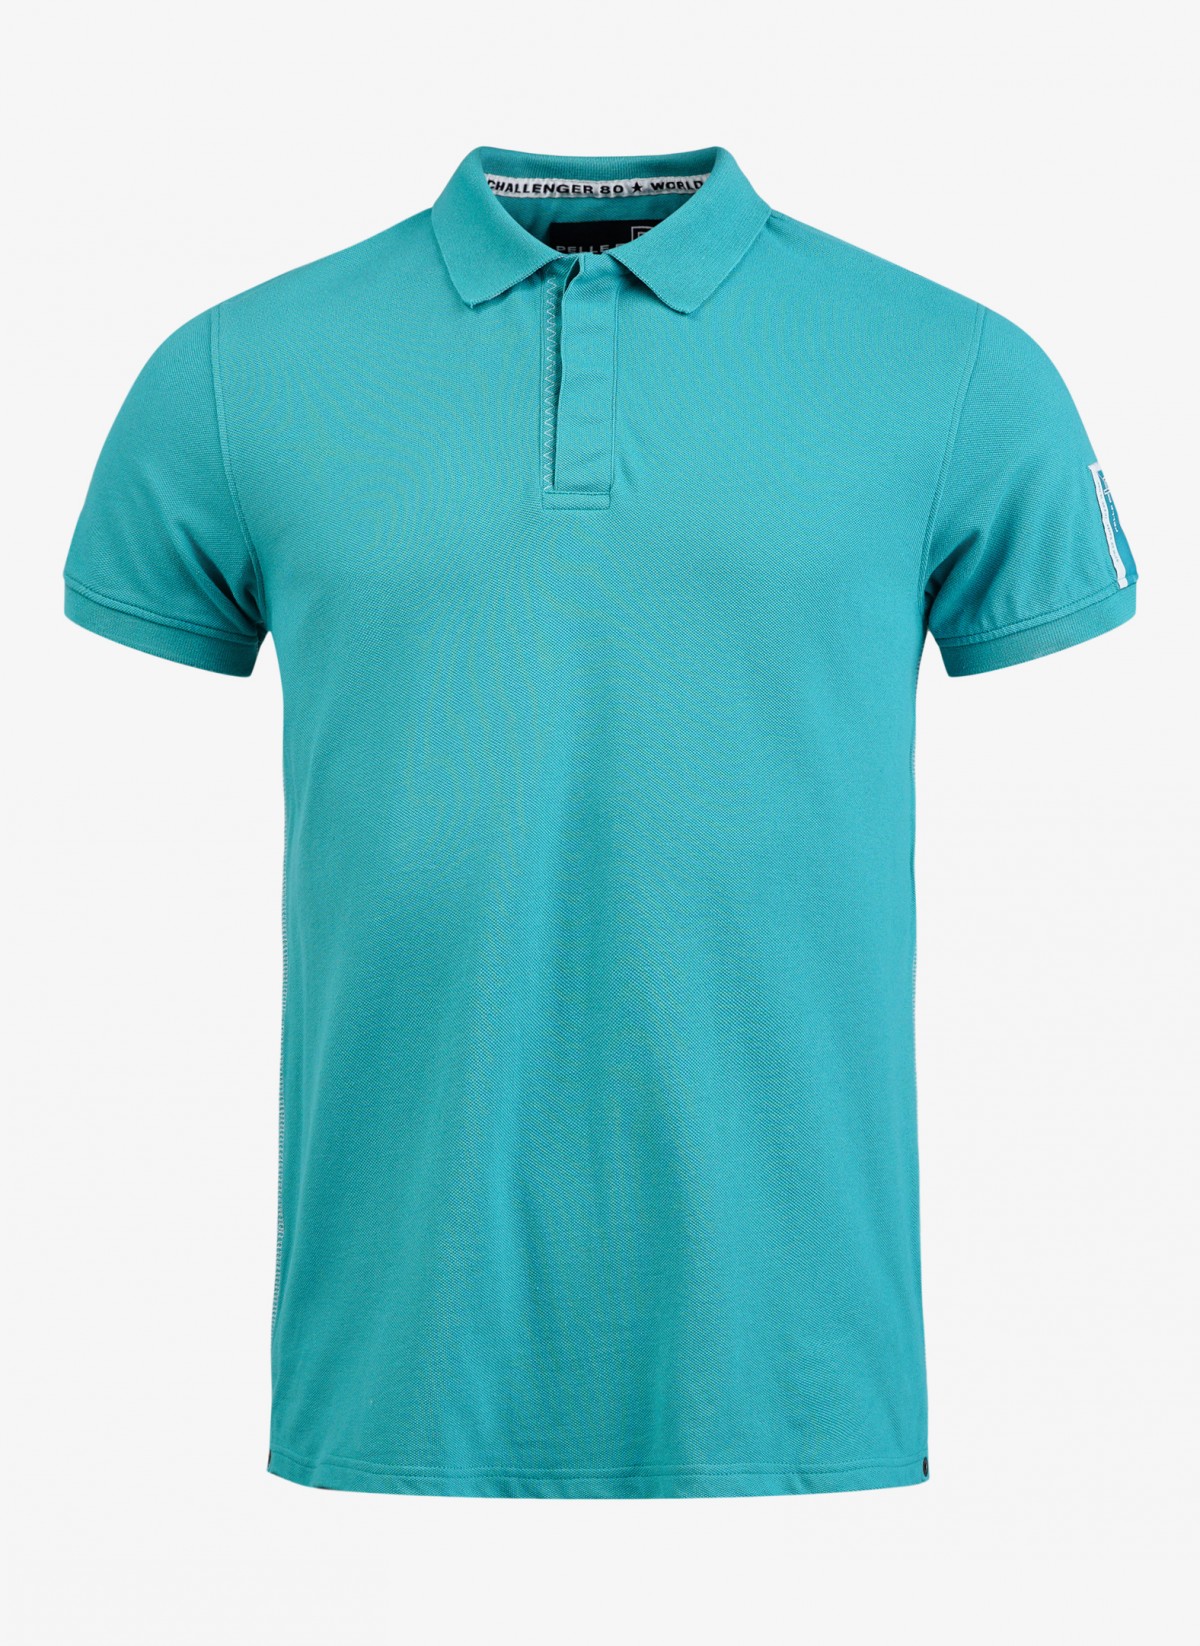 Team Polo Shirt - Killala Green - Ruffords Country Store